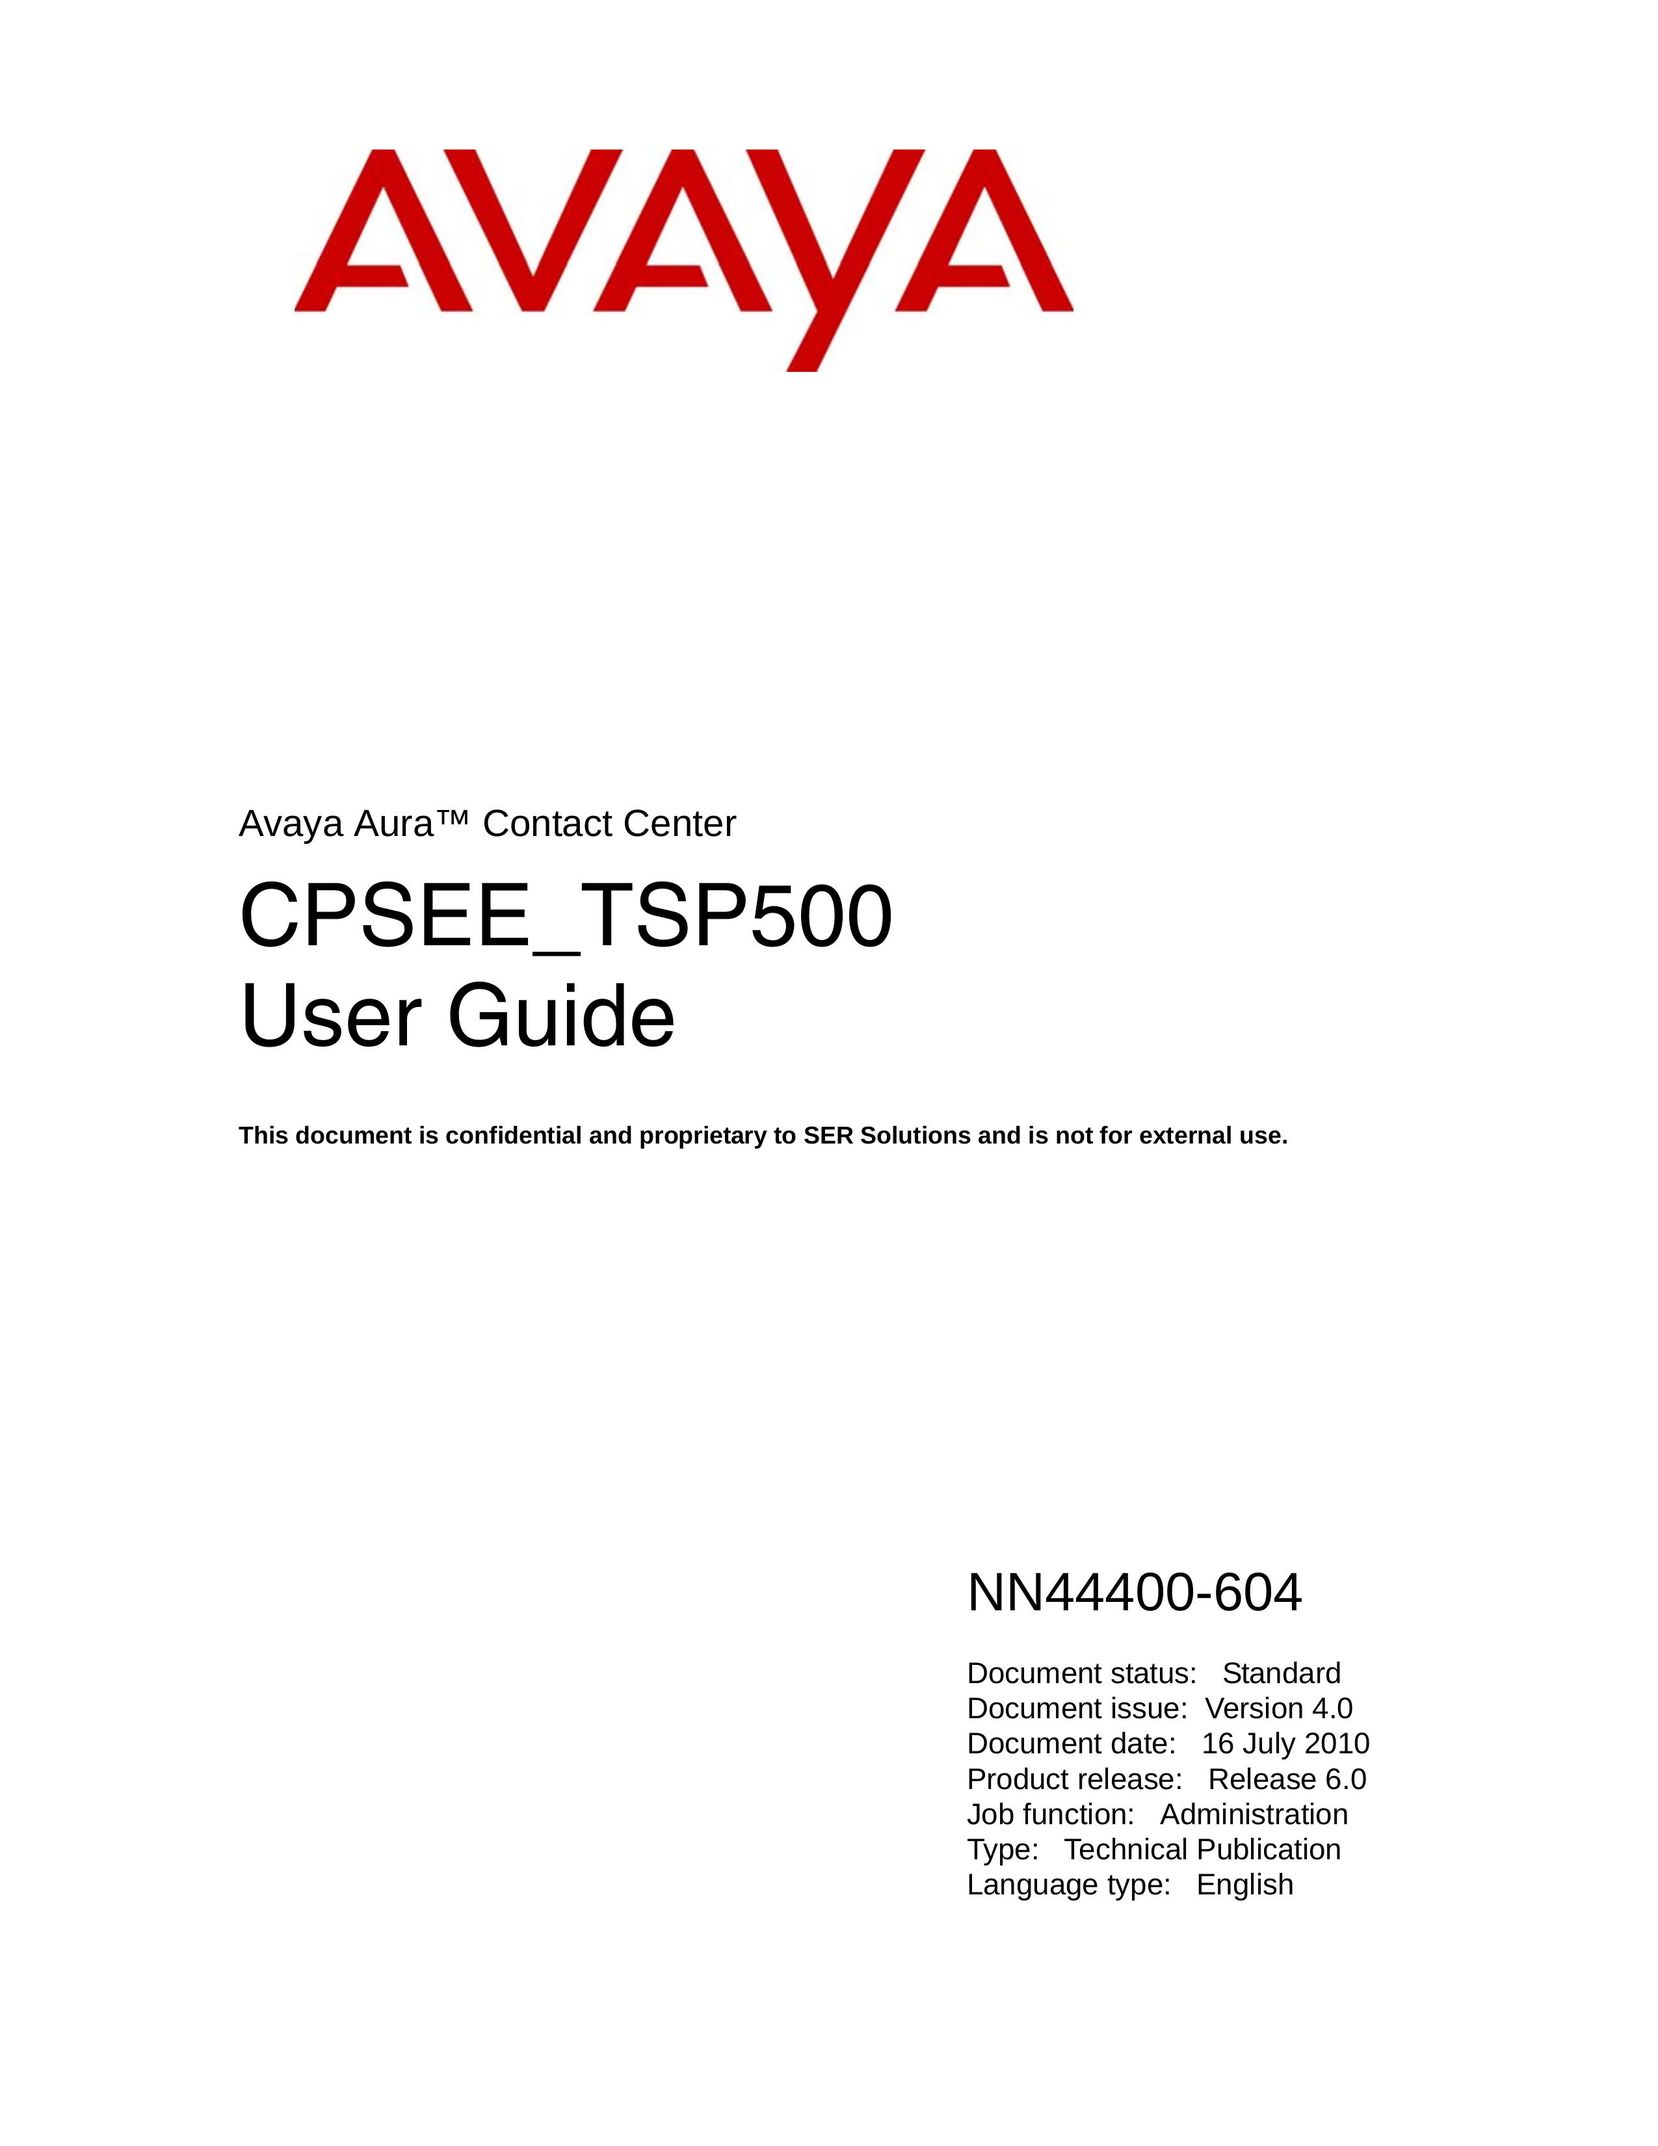 Avaya CPSEE_TSP500 Switch User Manual